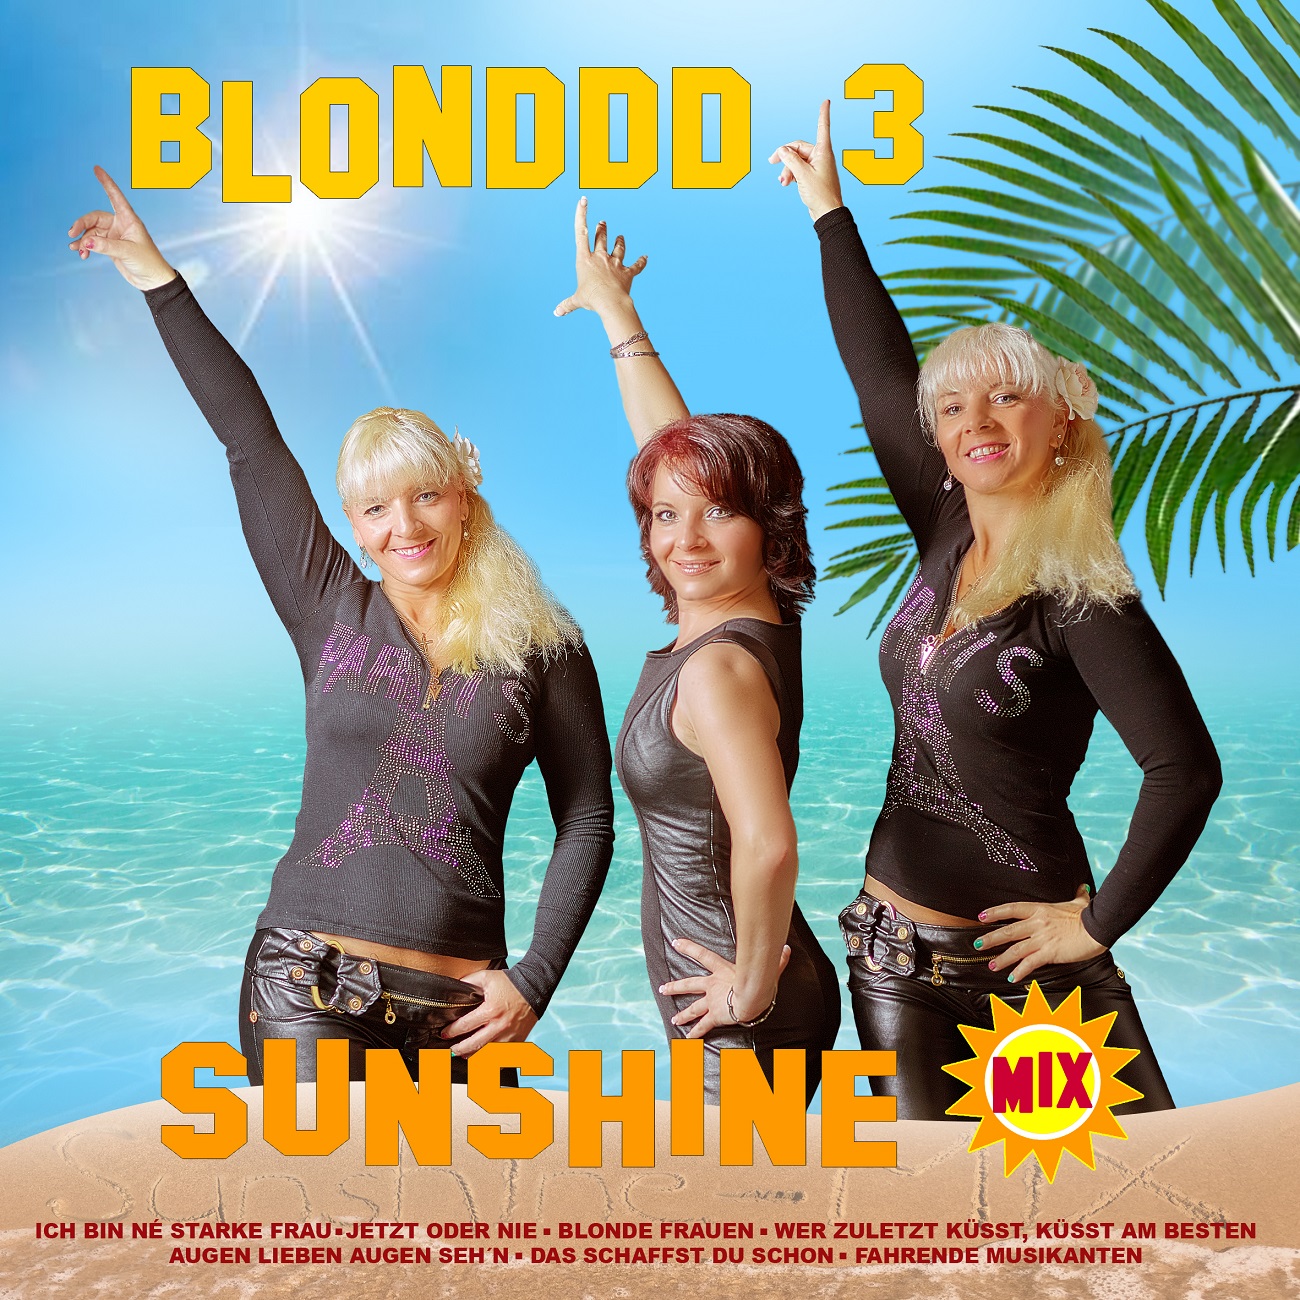 Blonddd 3CD Cover Sunshine Mix.jpg